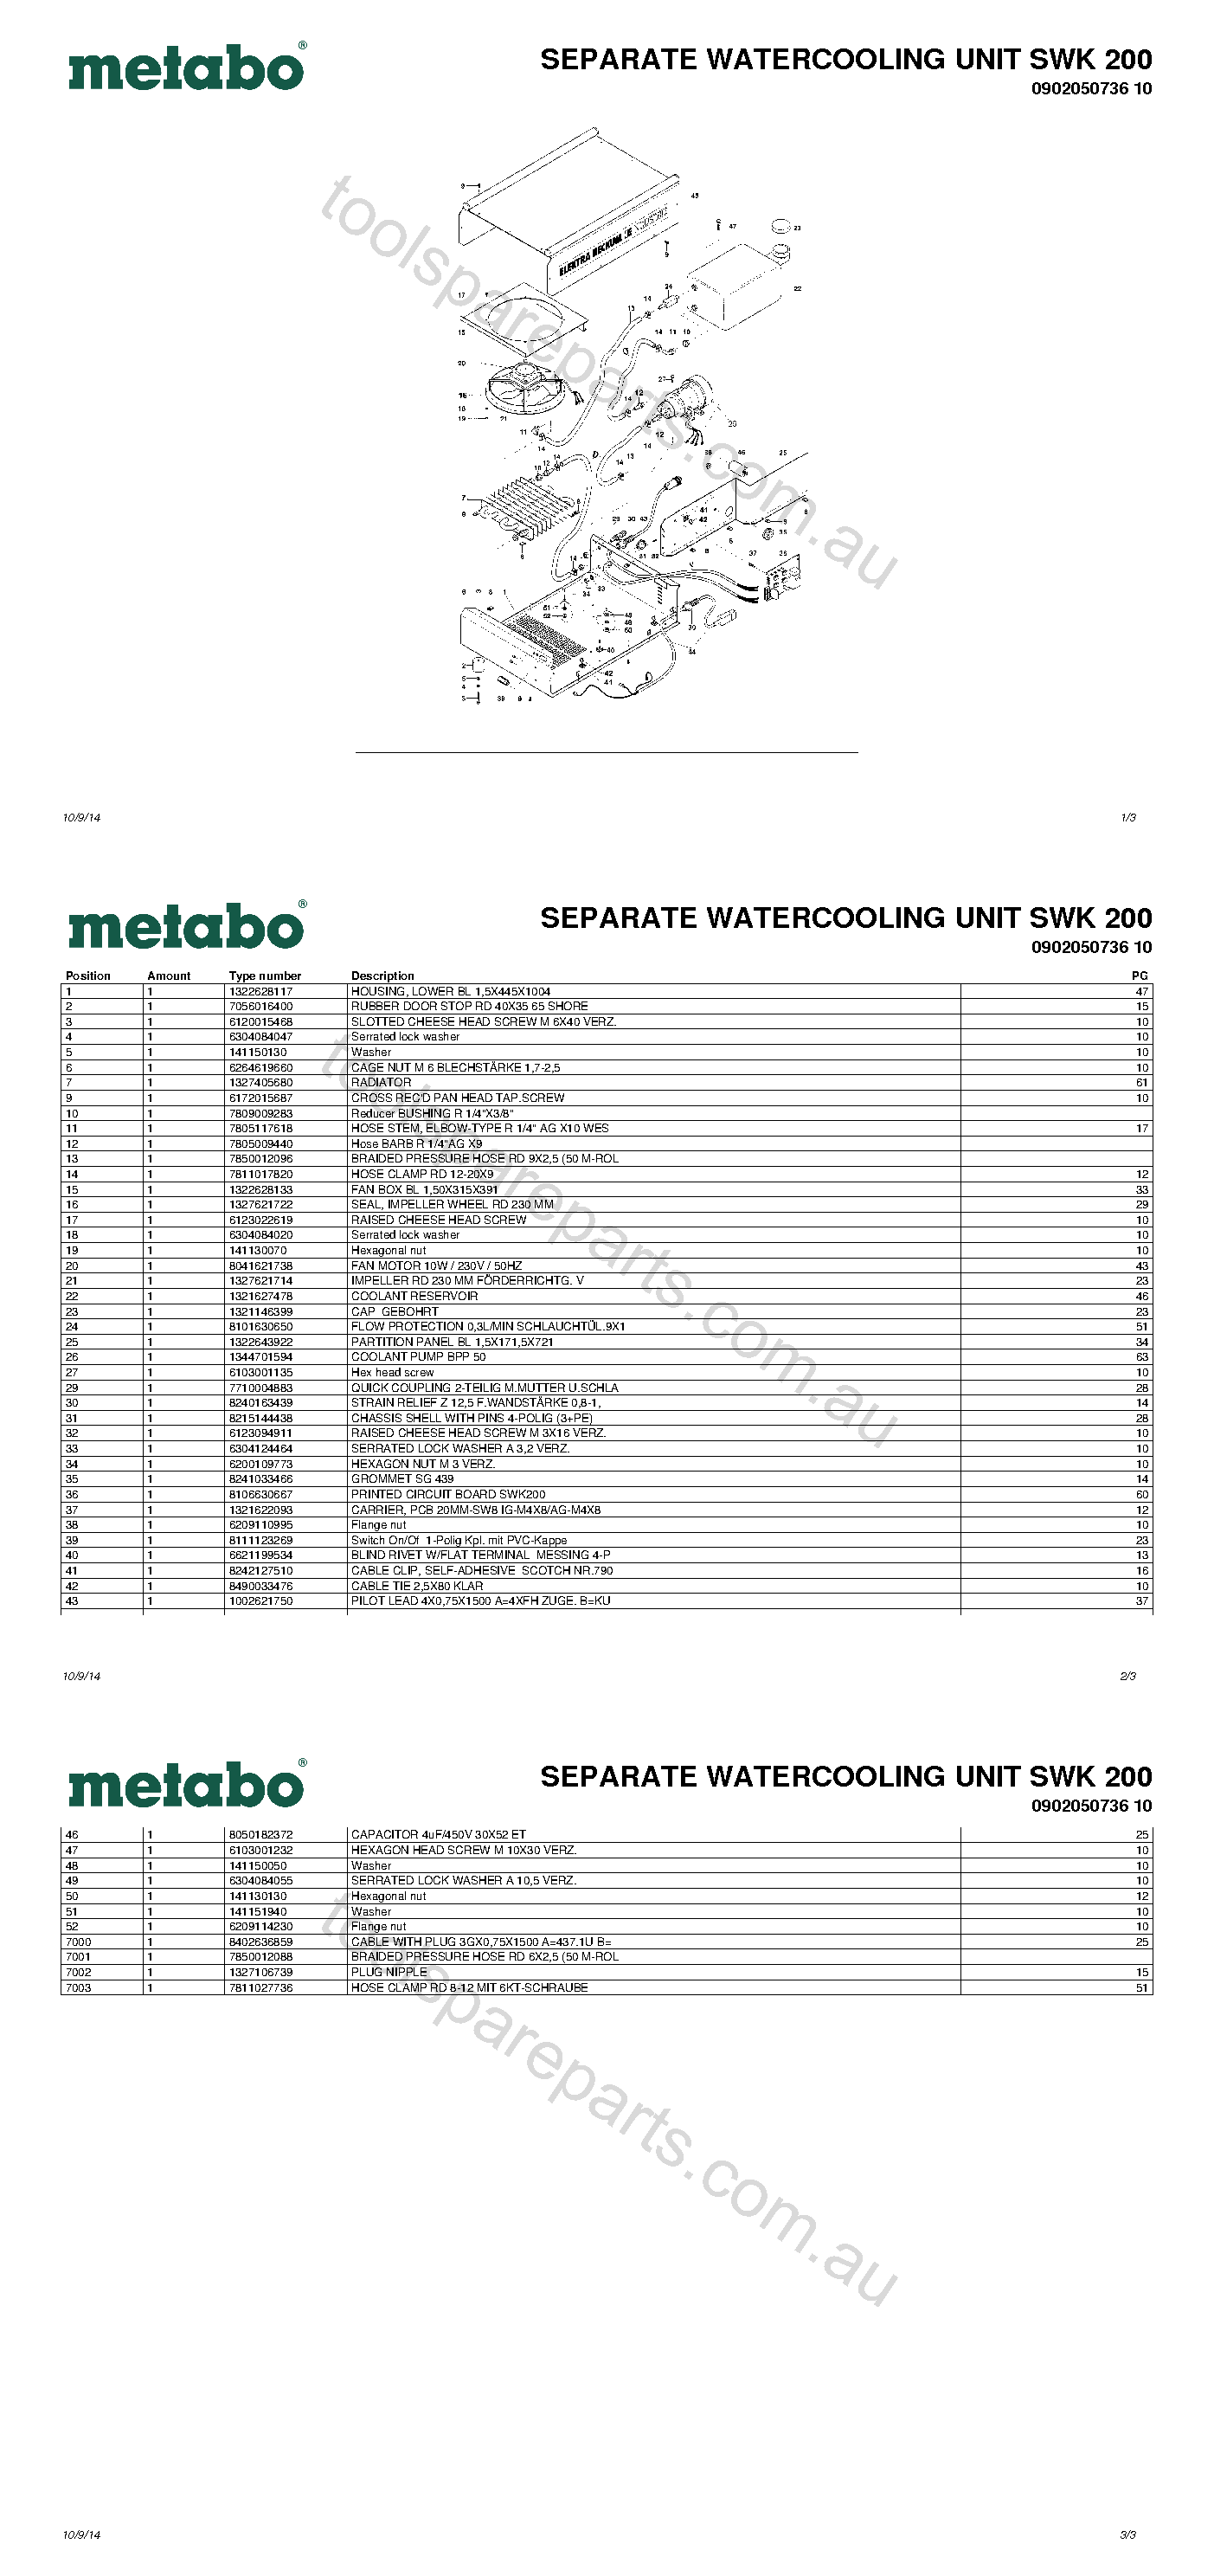 Metabo SEPARATE WATERCOOLING UNIT SWK 200 0902050736 10  Diagram 1